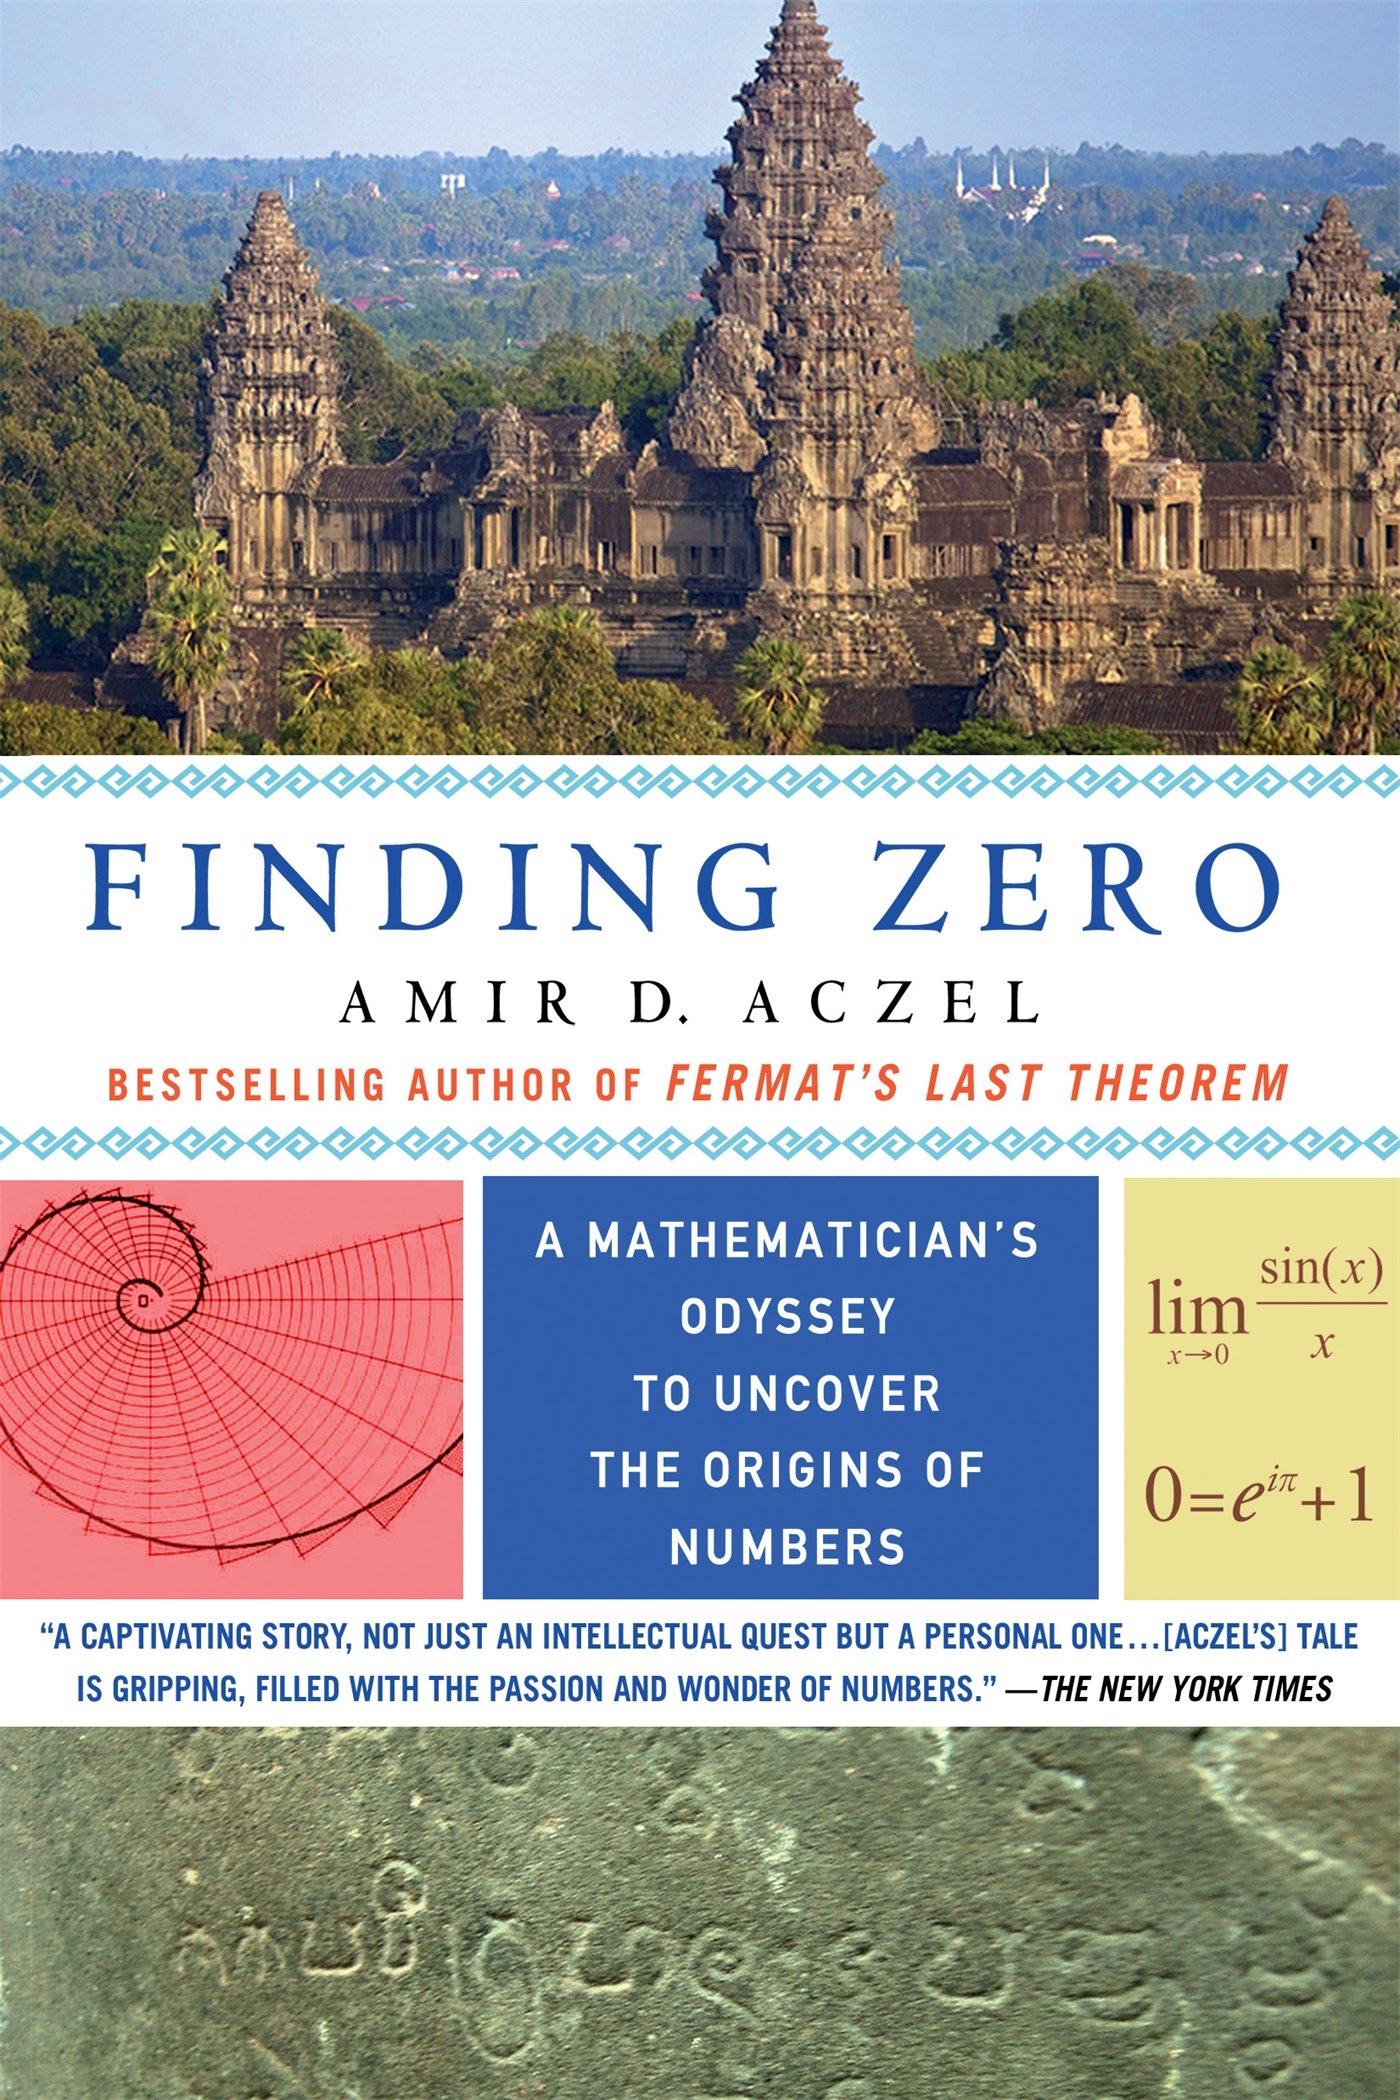 “Finding Zero” by Amir D. Aczel